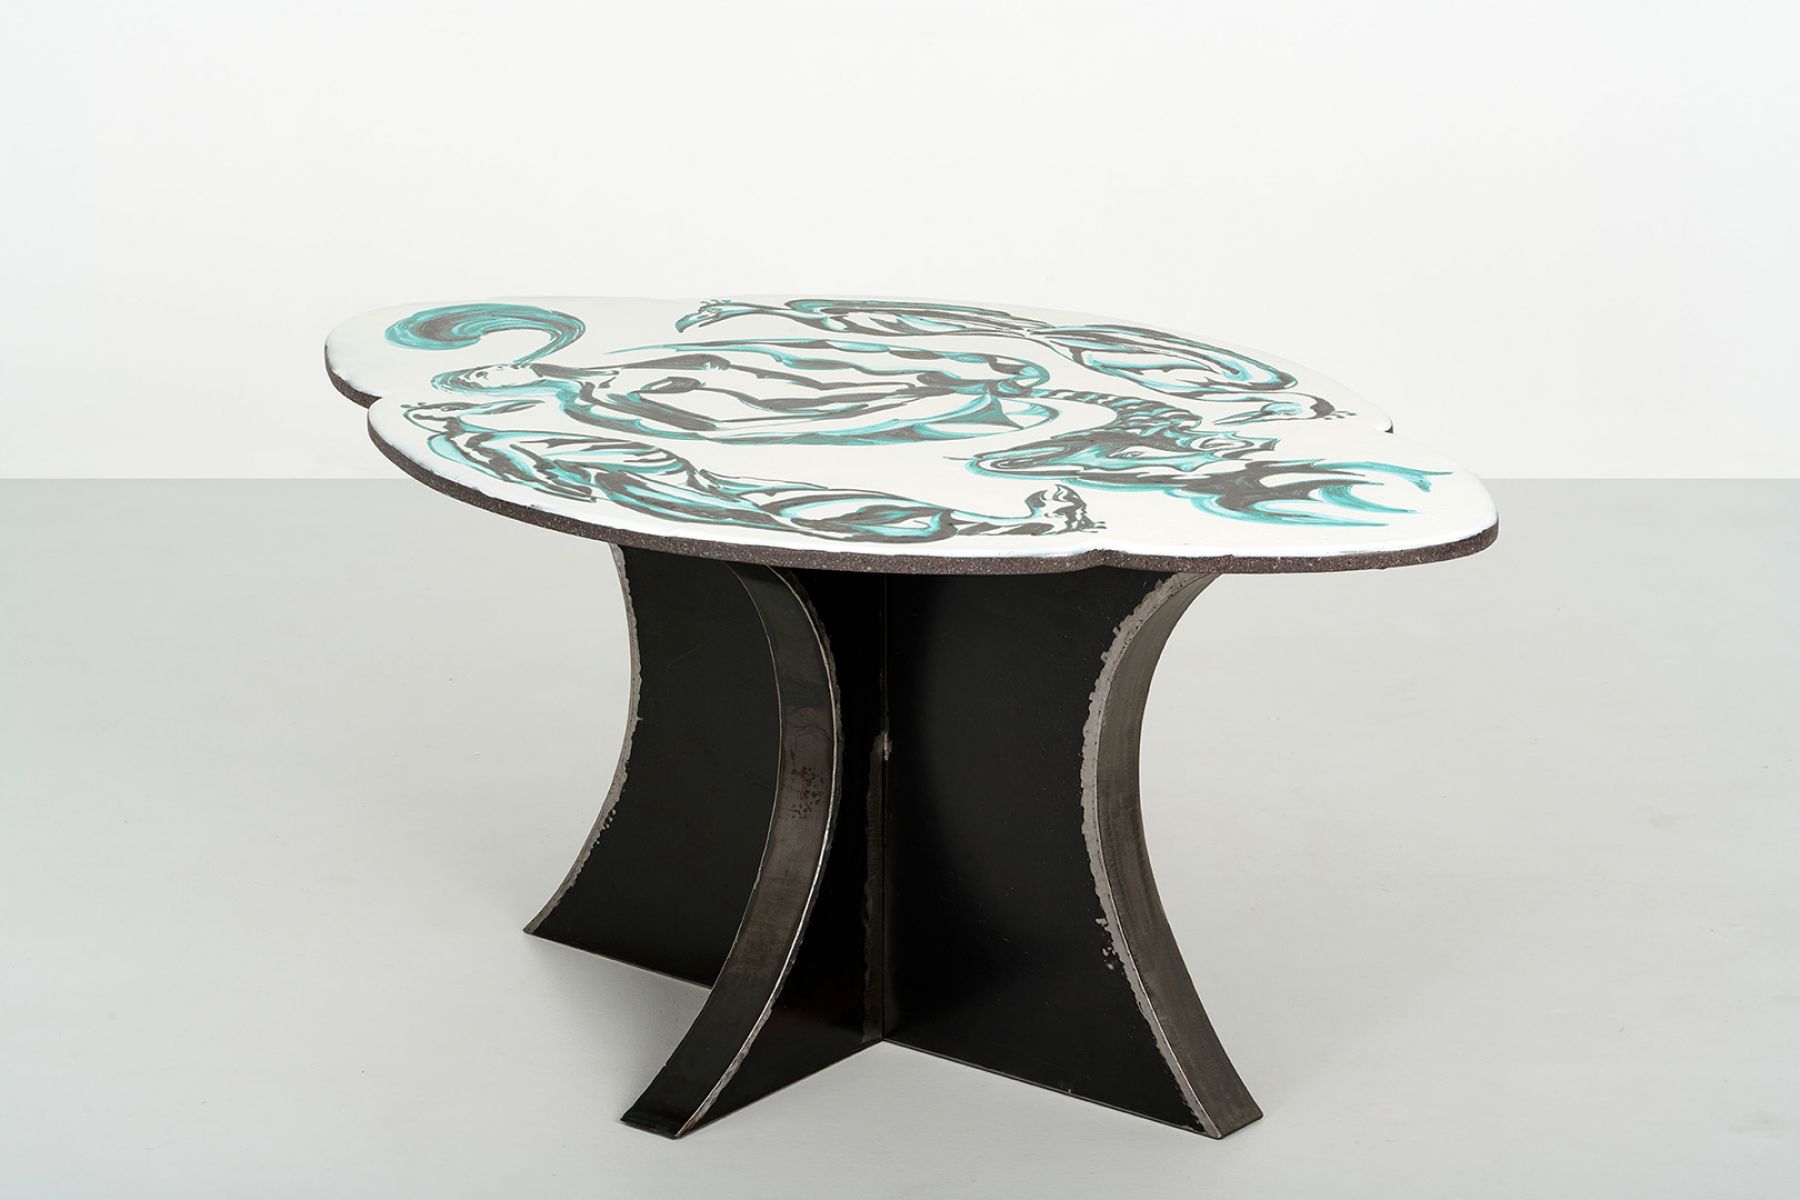 Clover‐shaped ceramic top  Lola Montes  pic-1